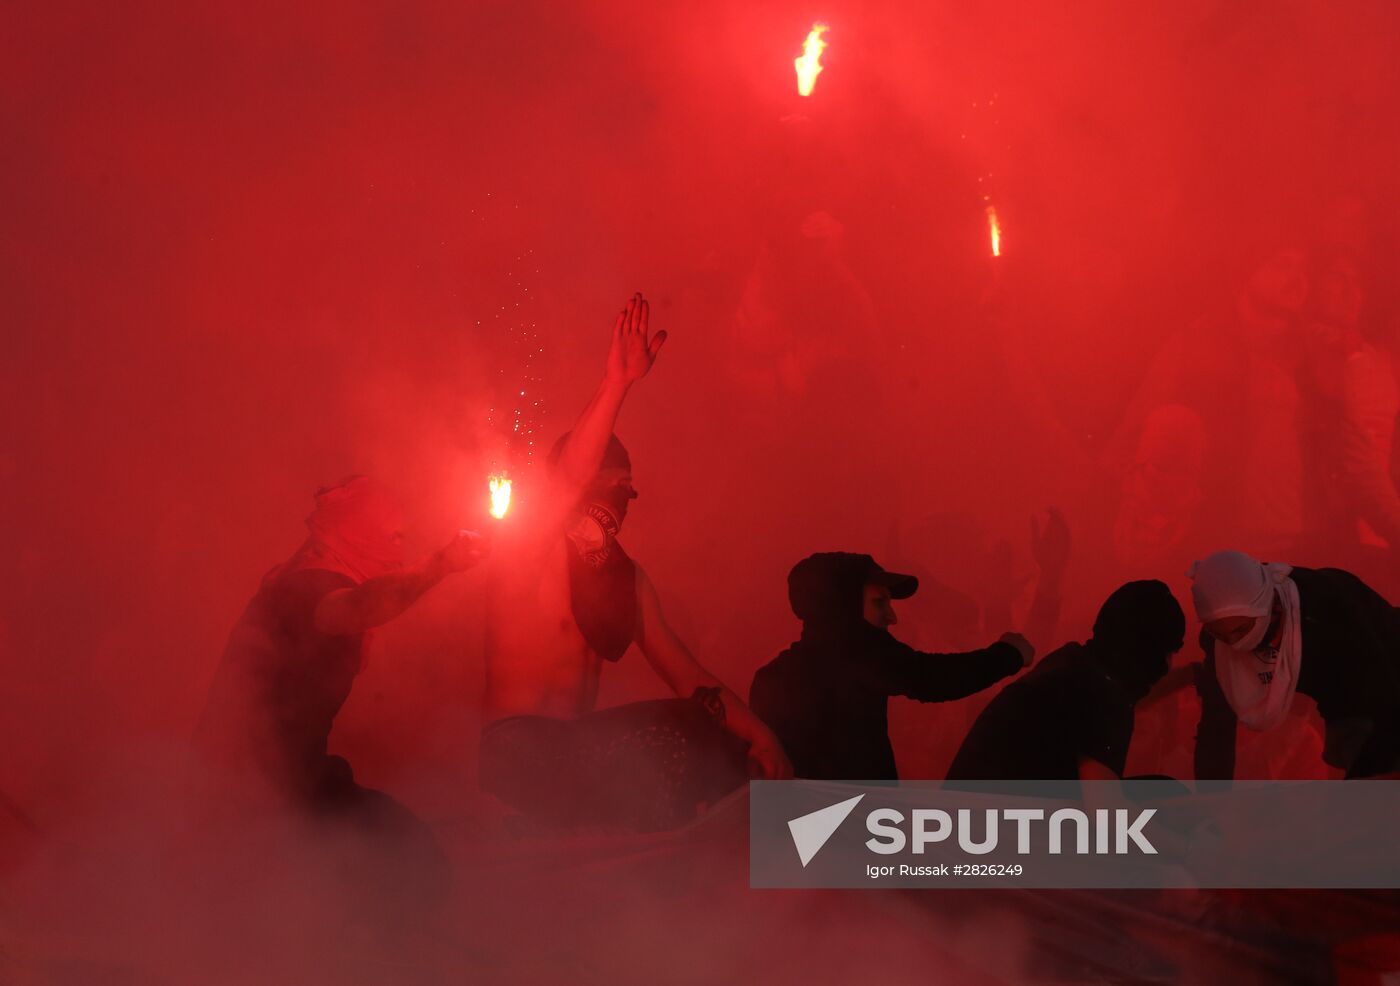 Football. Russian Premier League. Zenit vs. Spartak